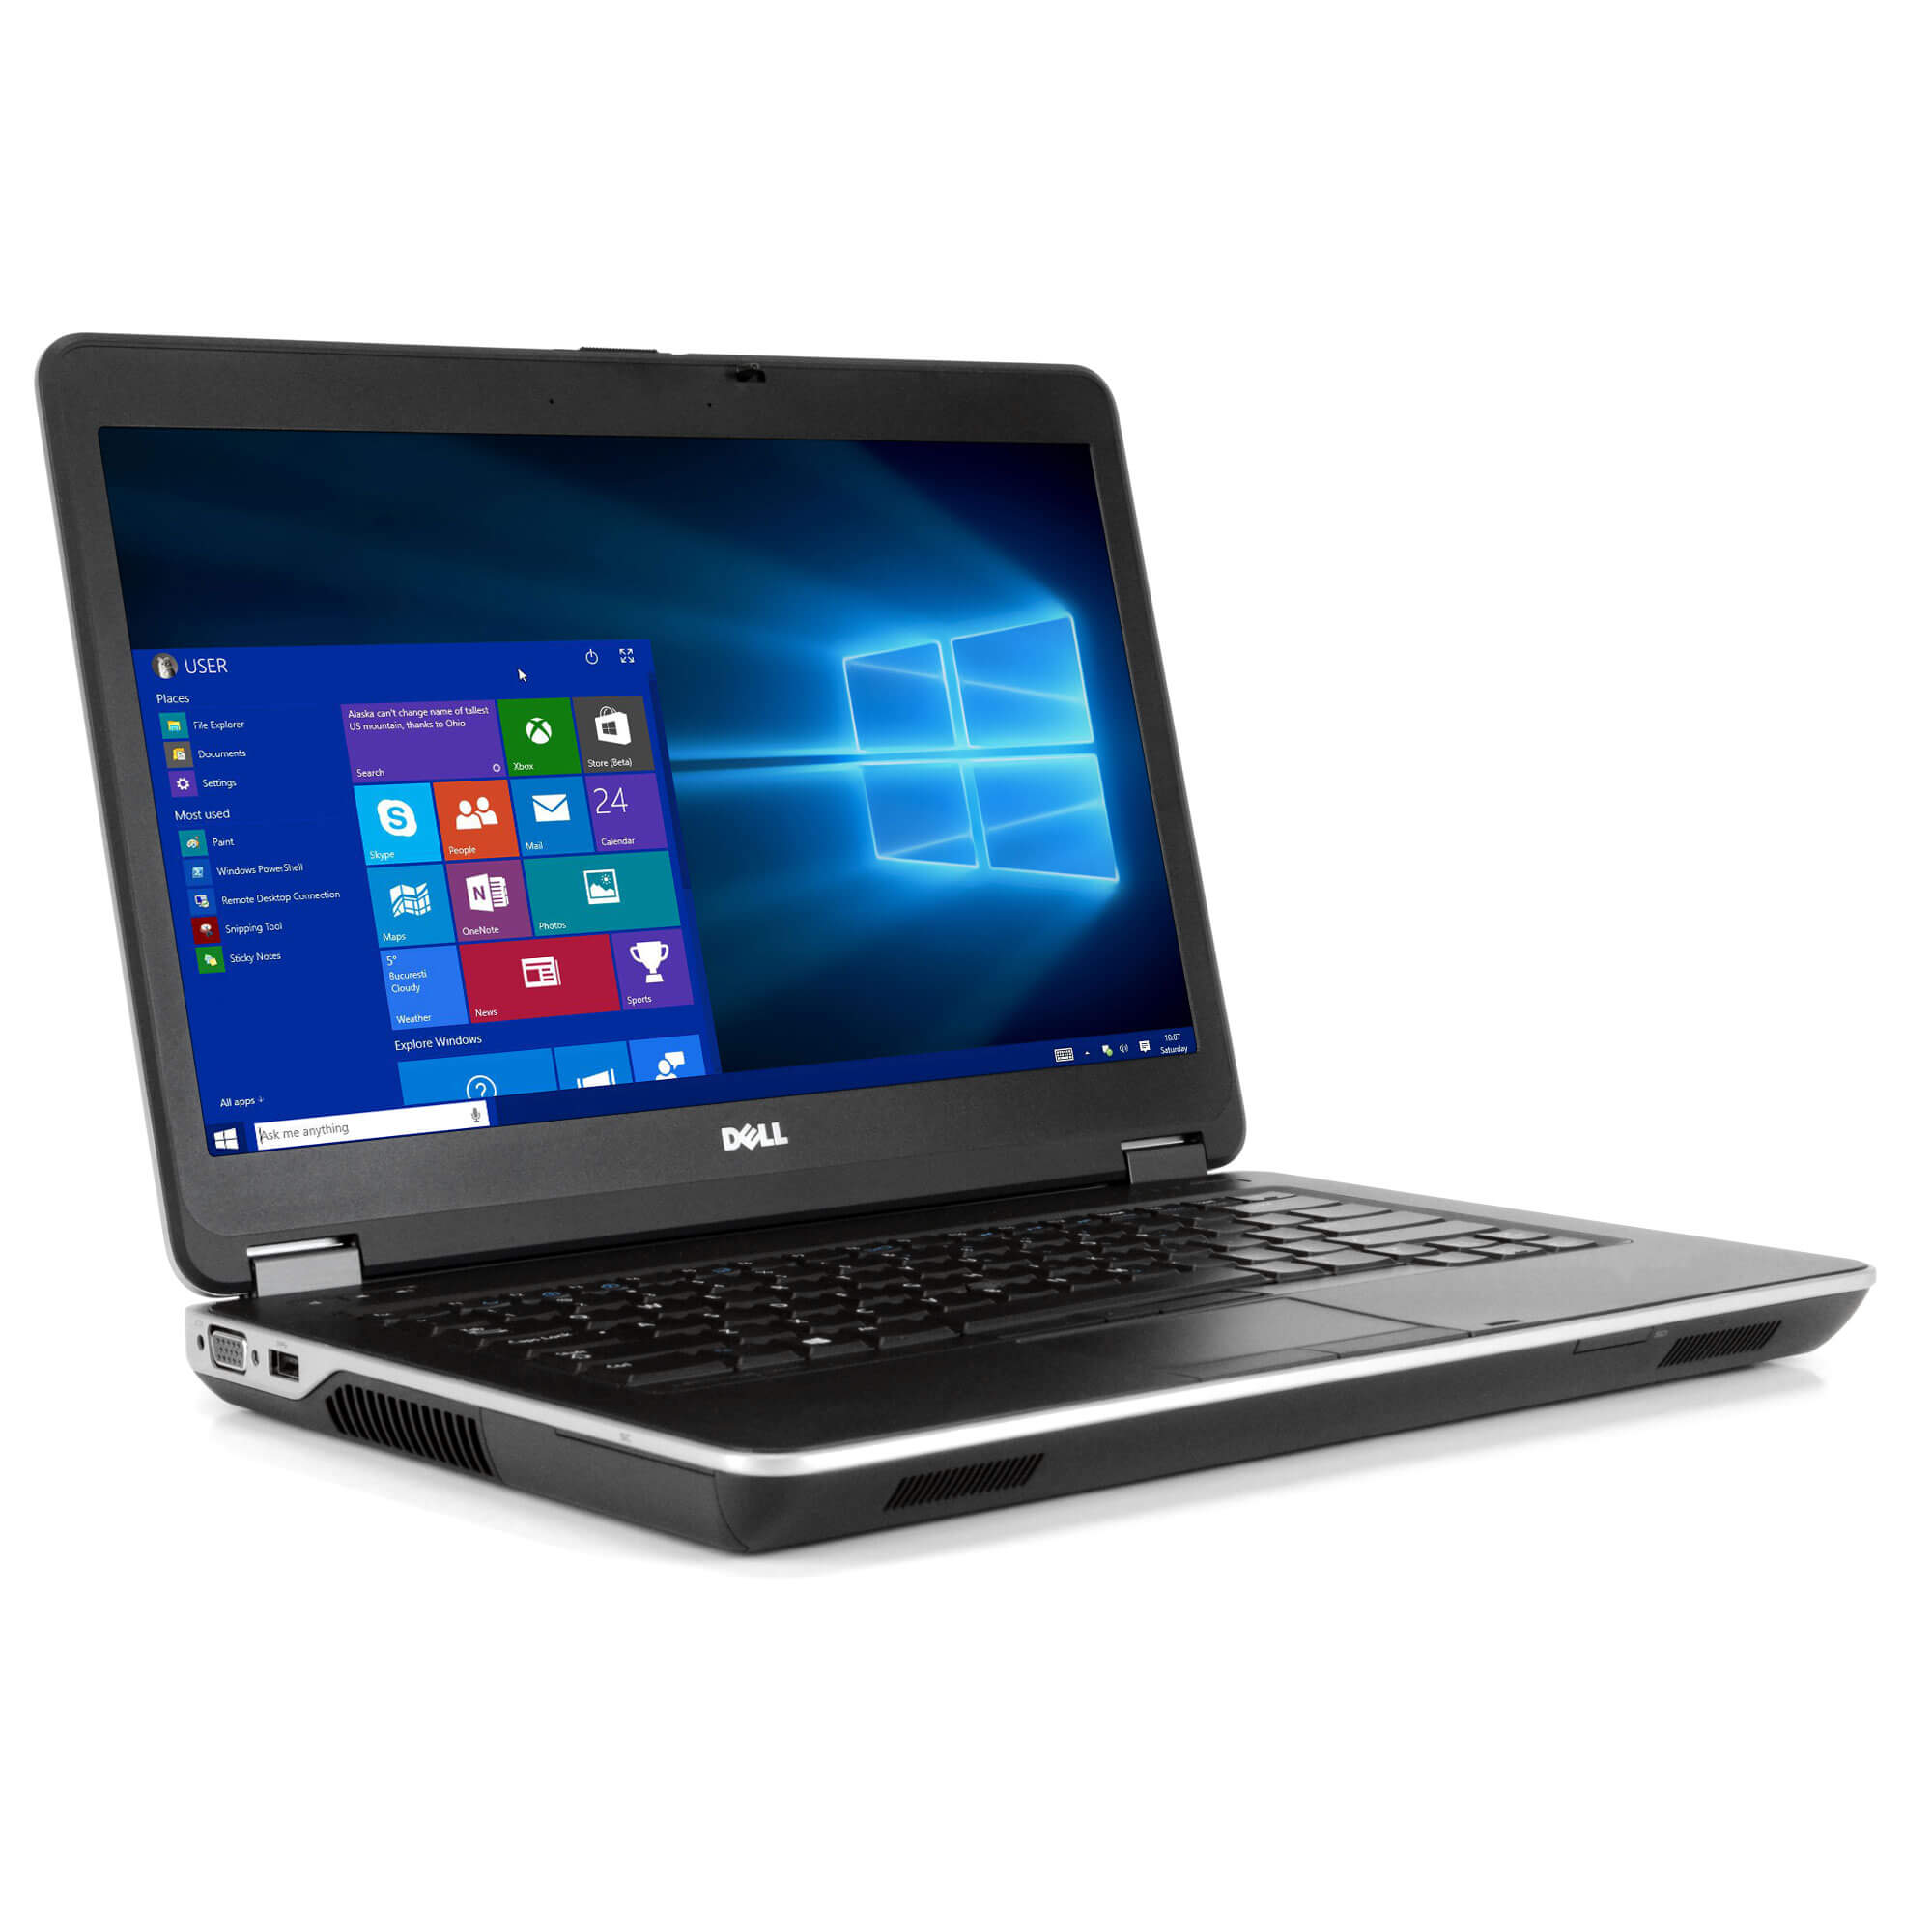 Dell Latitude E6440 14" Laptop, 2.6 GHz Intel i5 Dual Core Gen 4, 4GB RAM, 500GB SATA HD, Windows 10 Home 64 Bit (Renewed)